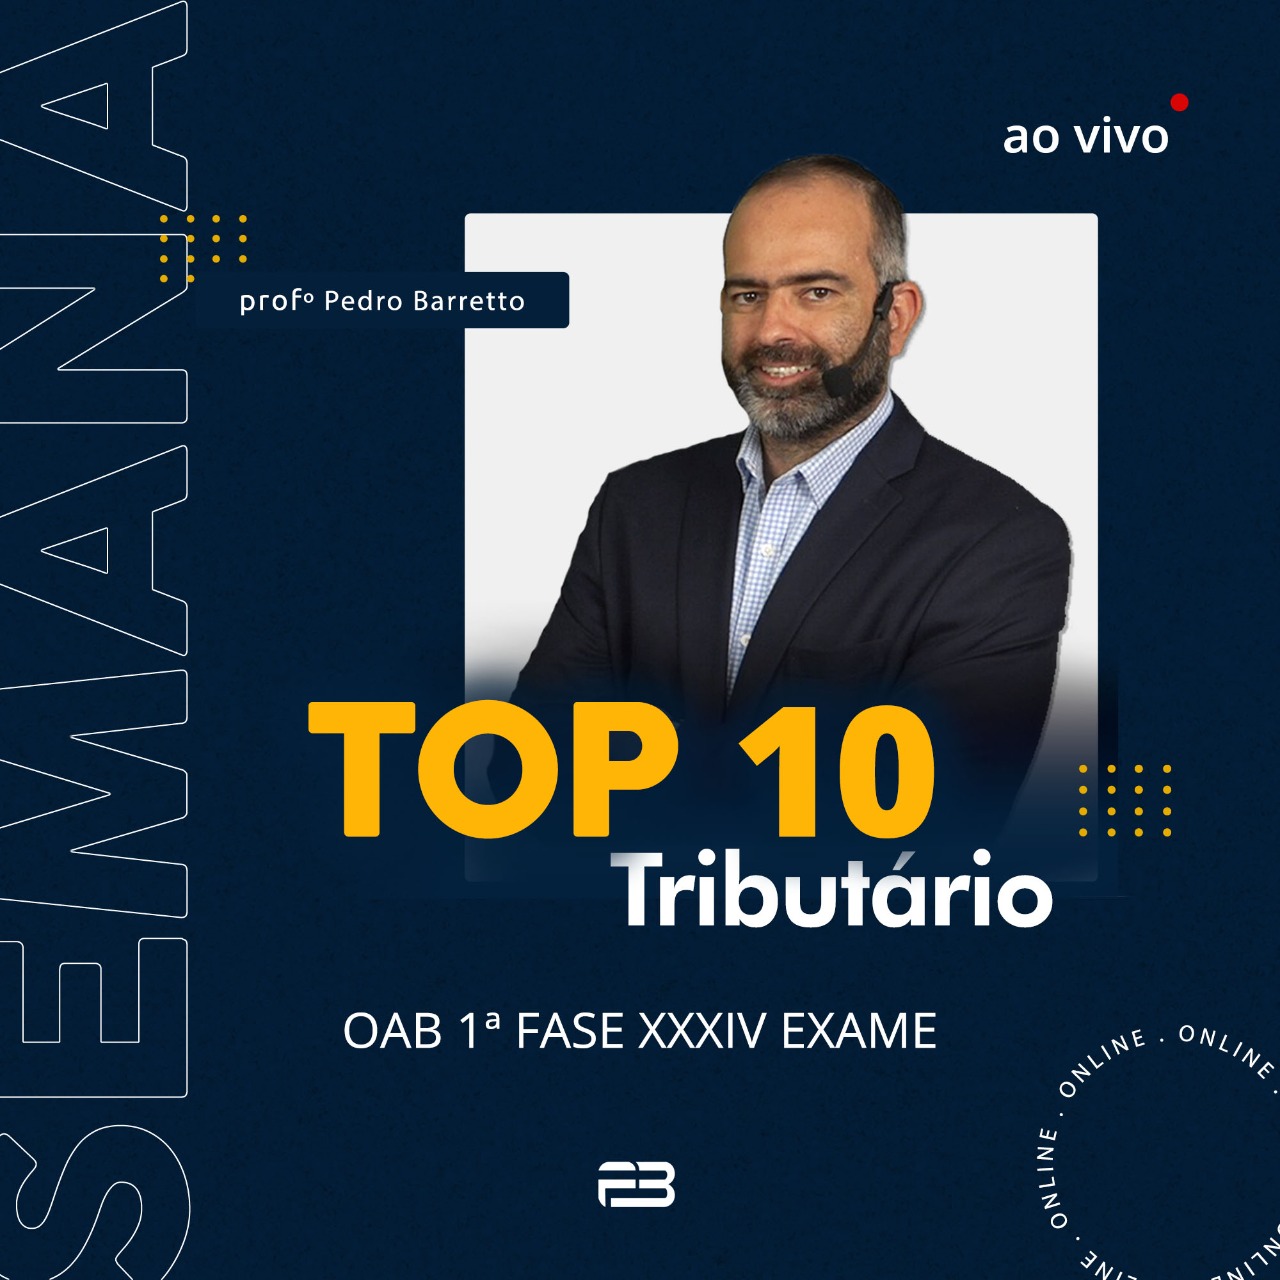 TOP 10 TRIBUTÁRIO - OAB 1º FASE XXXIV EXAME